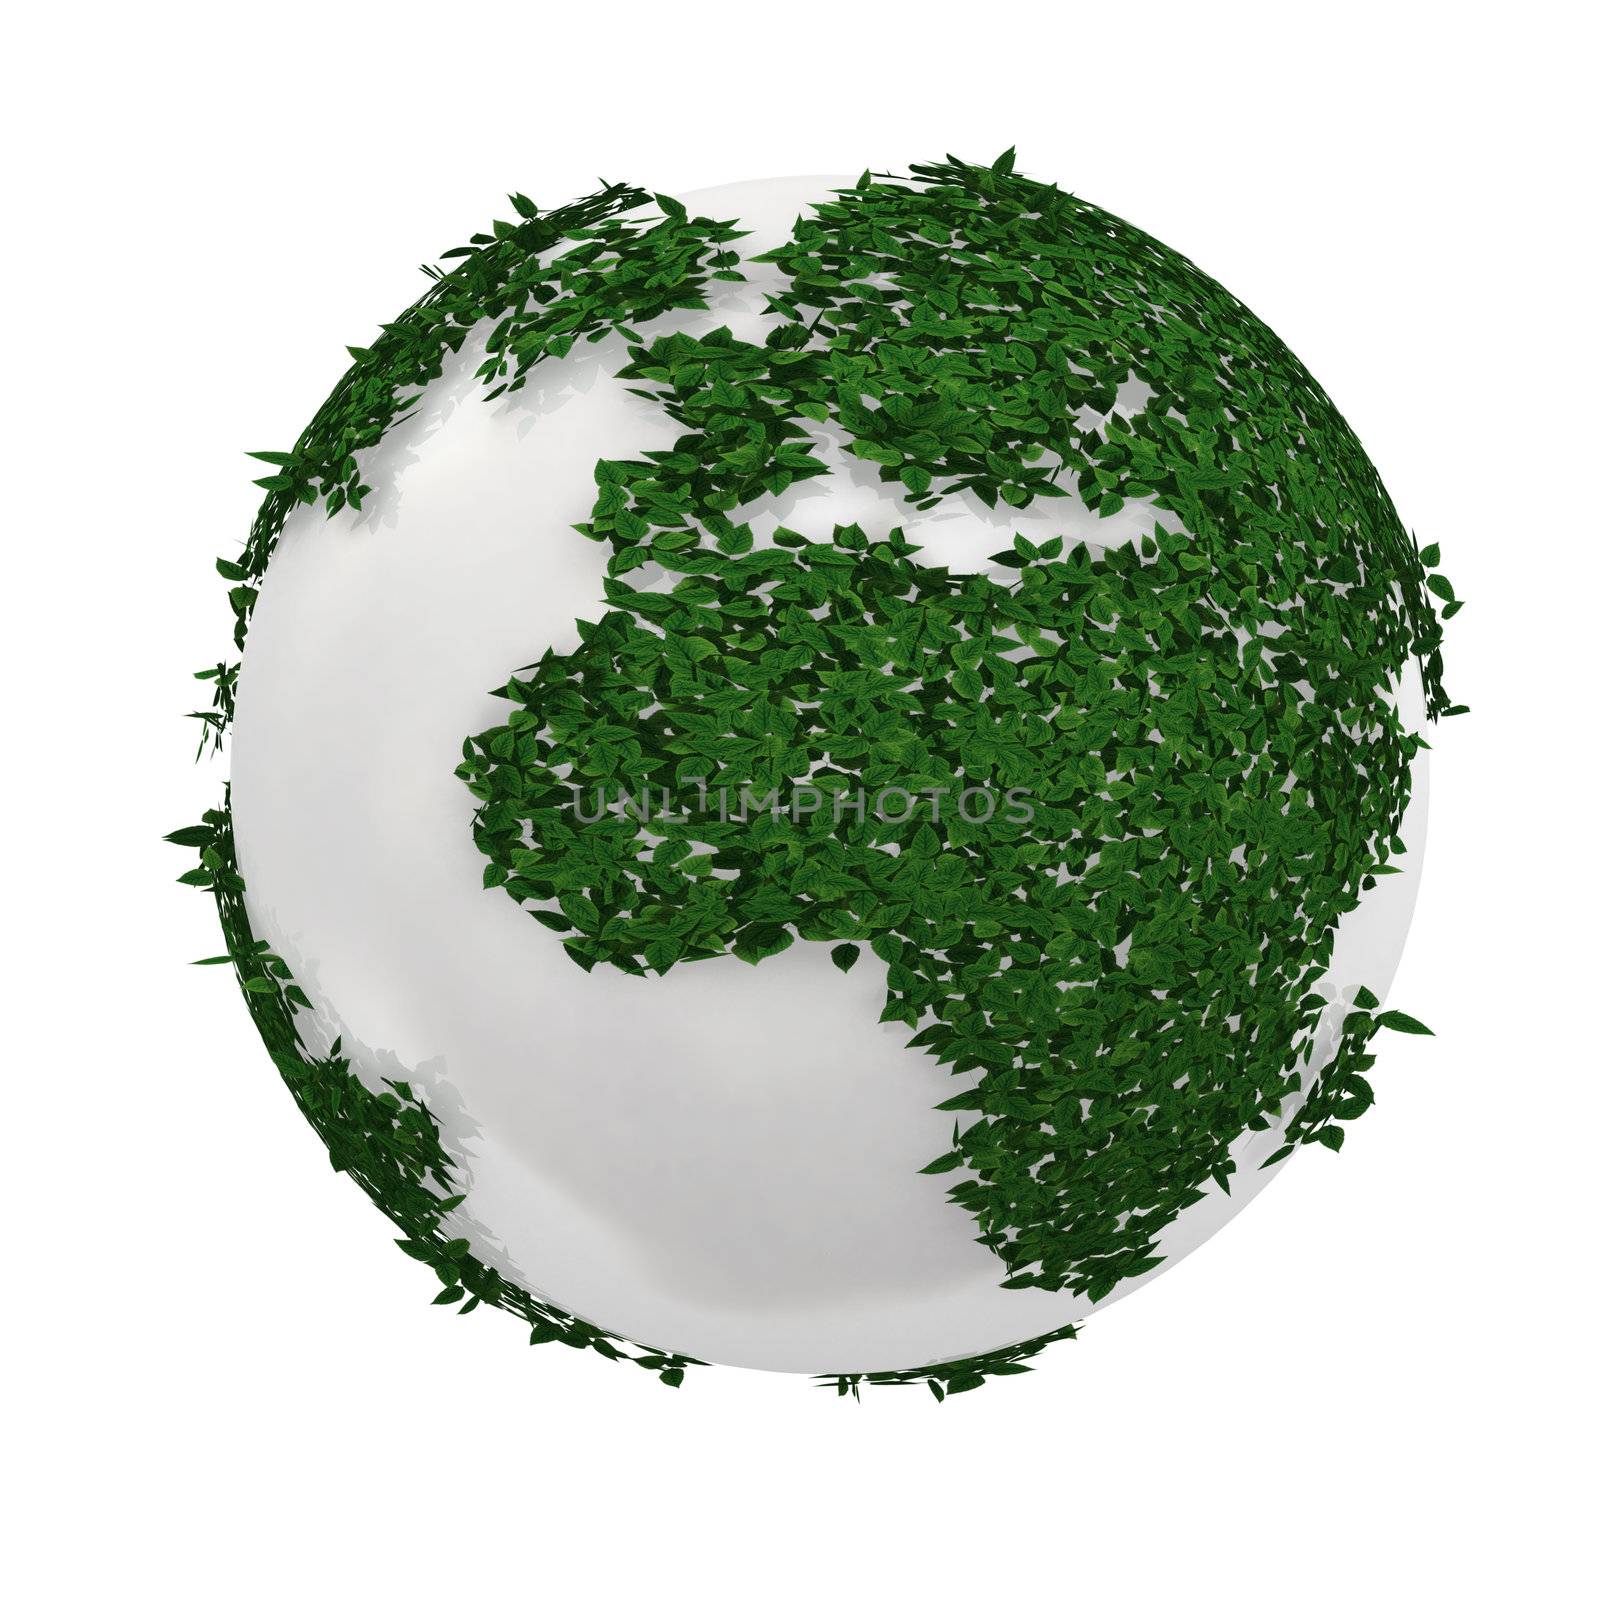 Green earth by koun